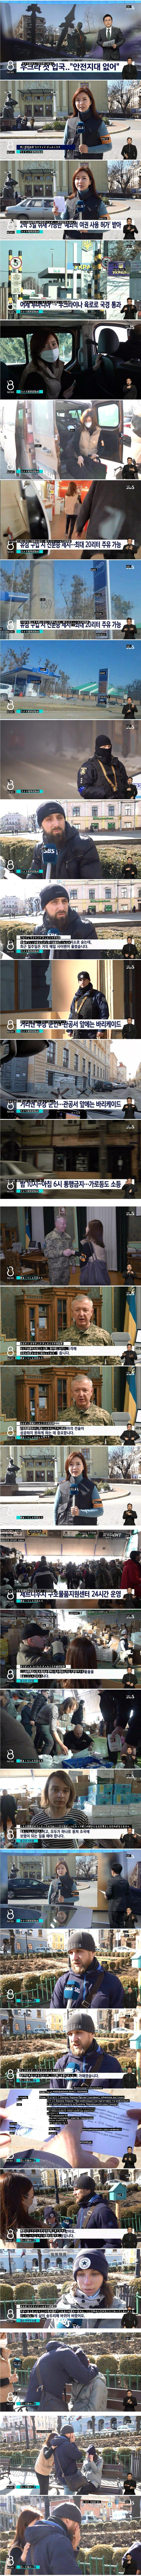 SBS、韓国メディア初のウクライナ現地取材